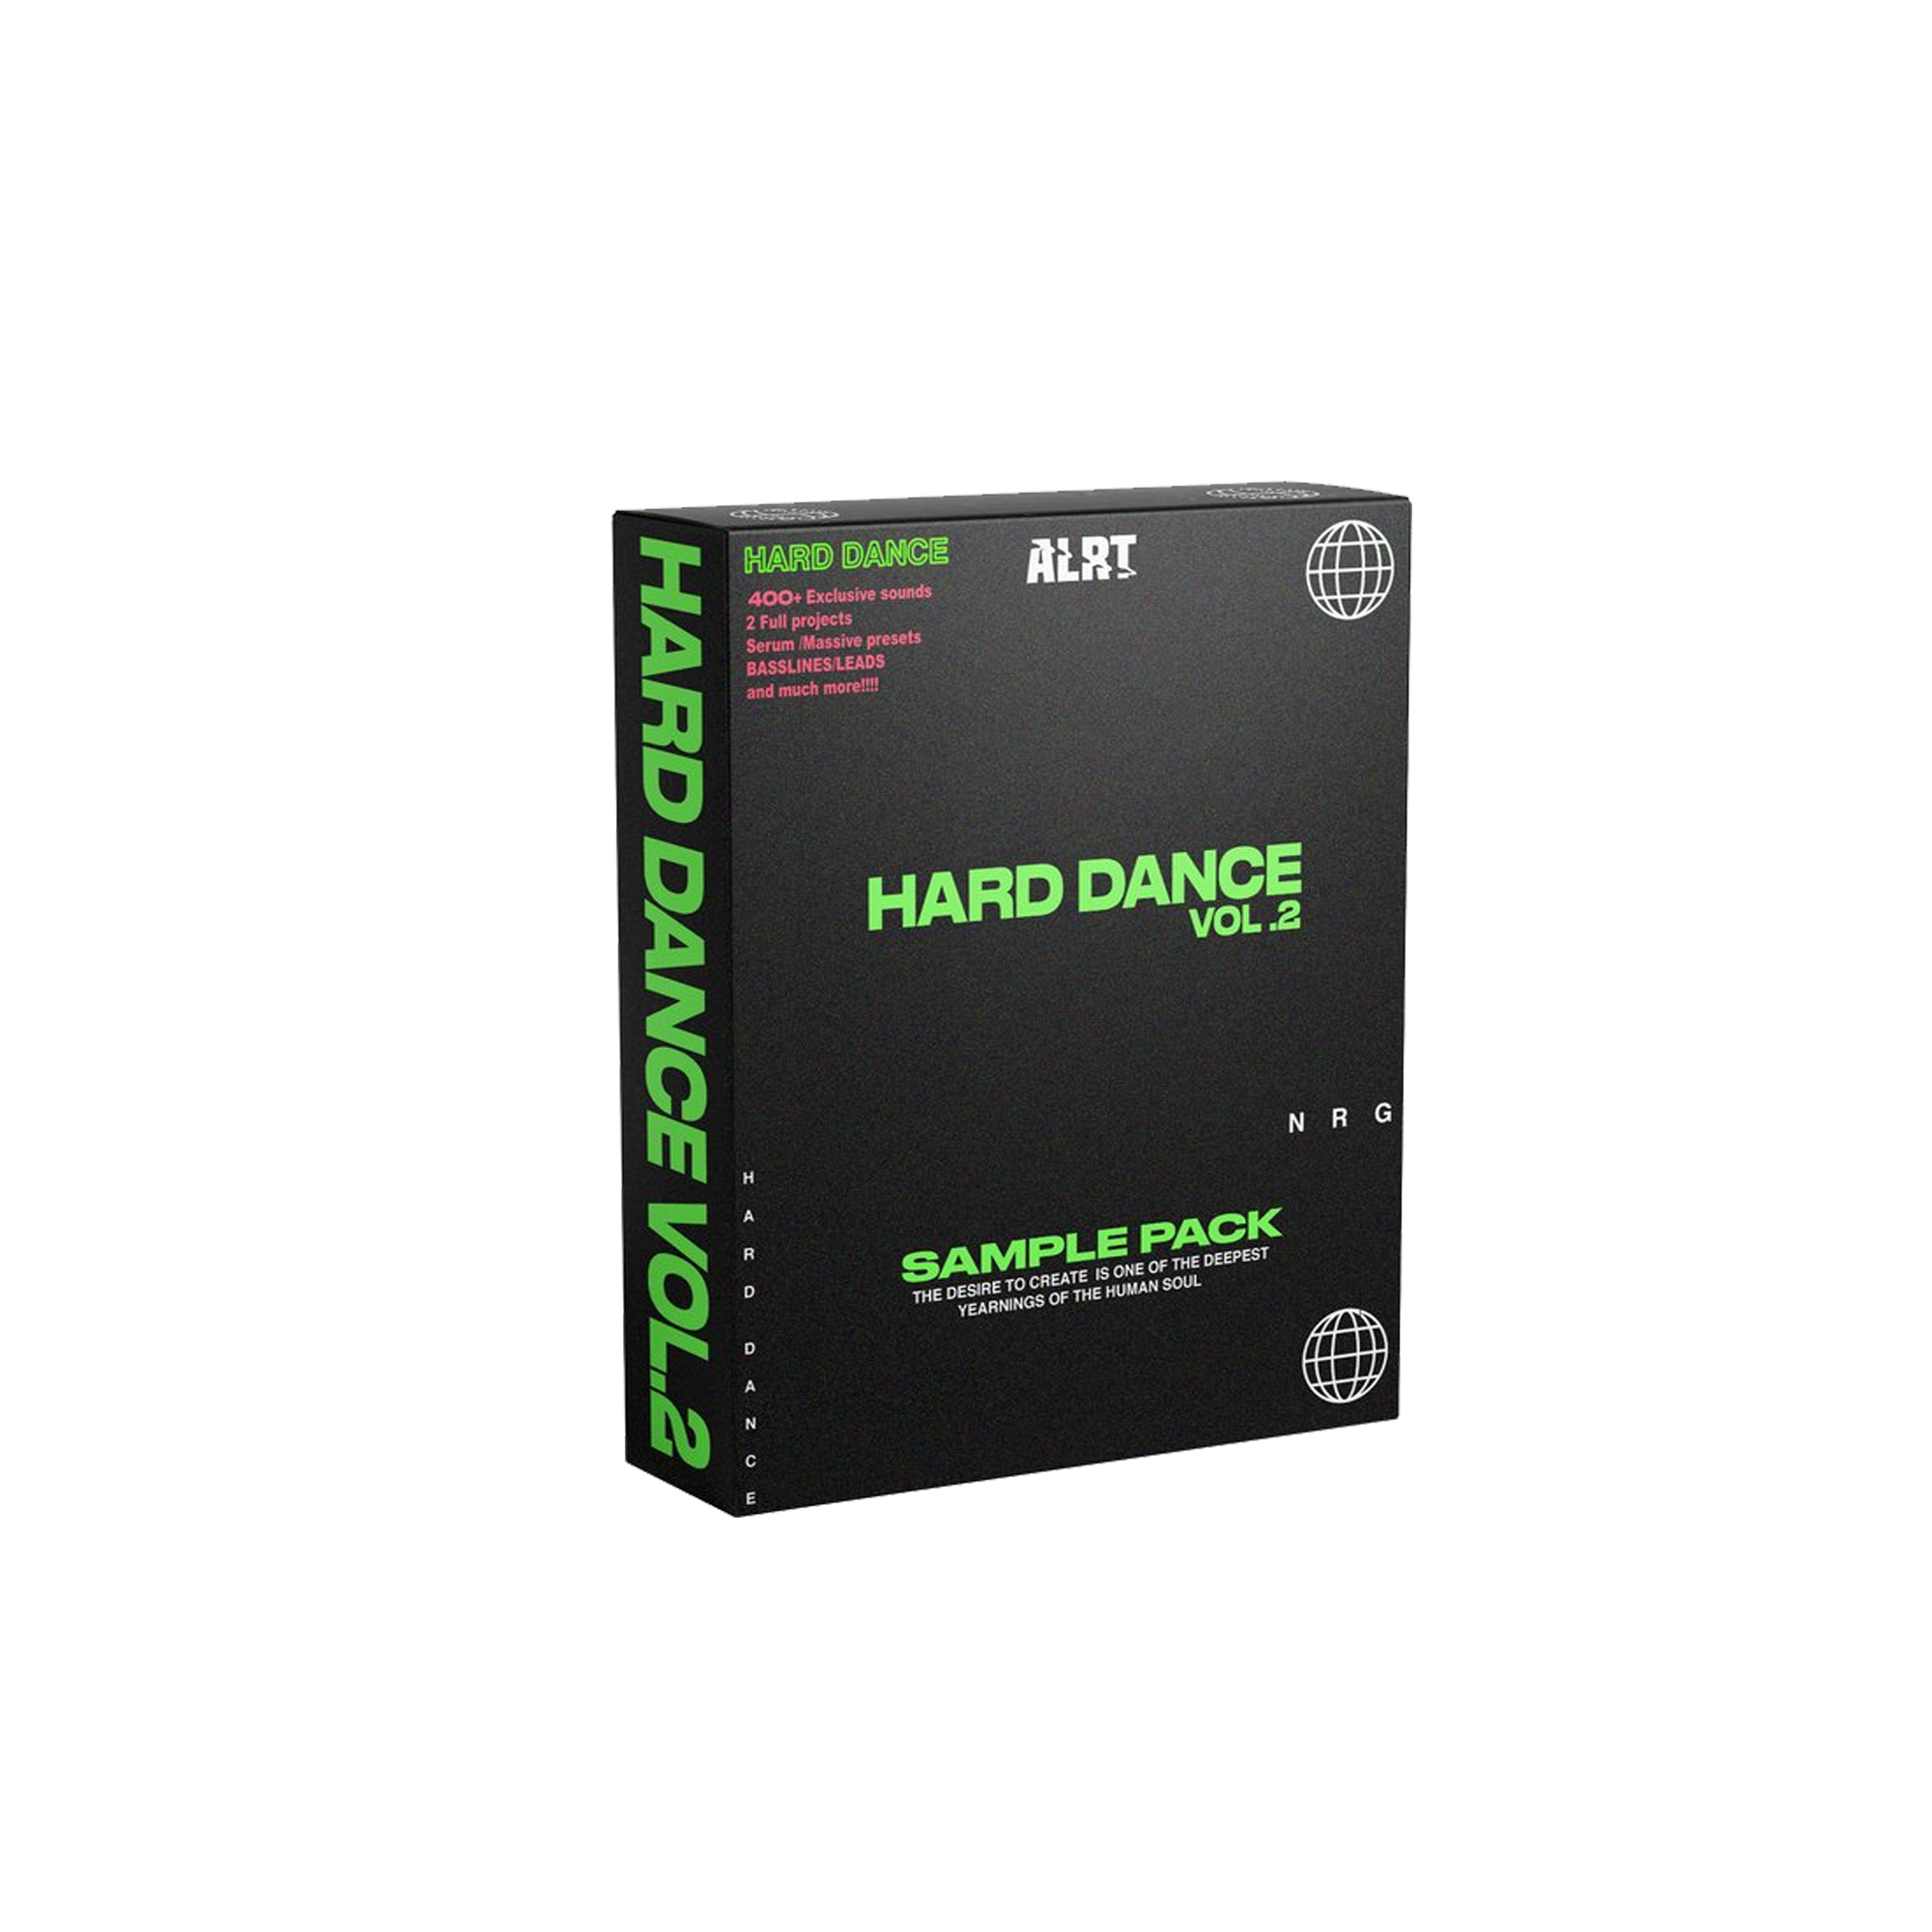 Hard Dance V.2